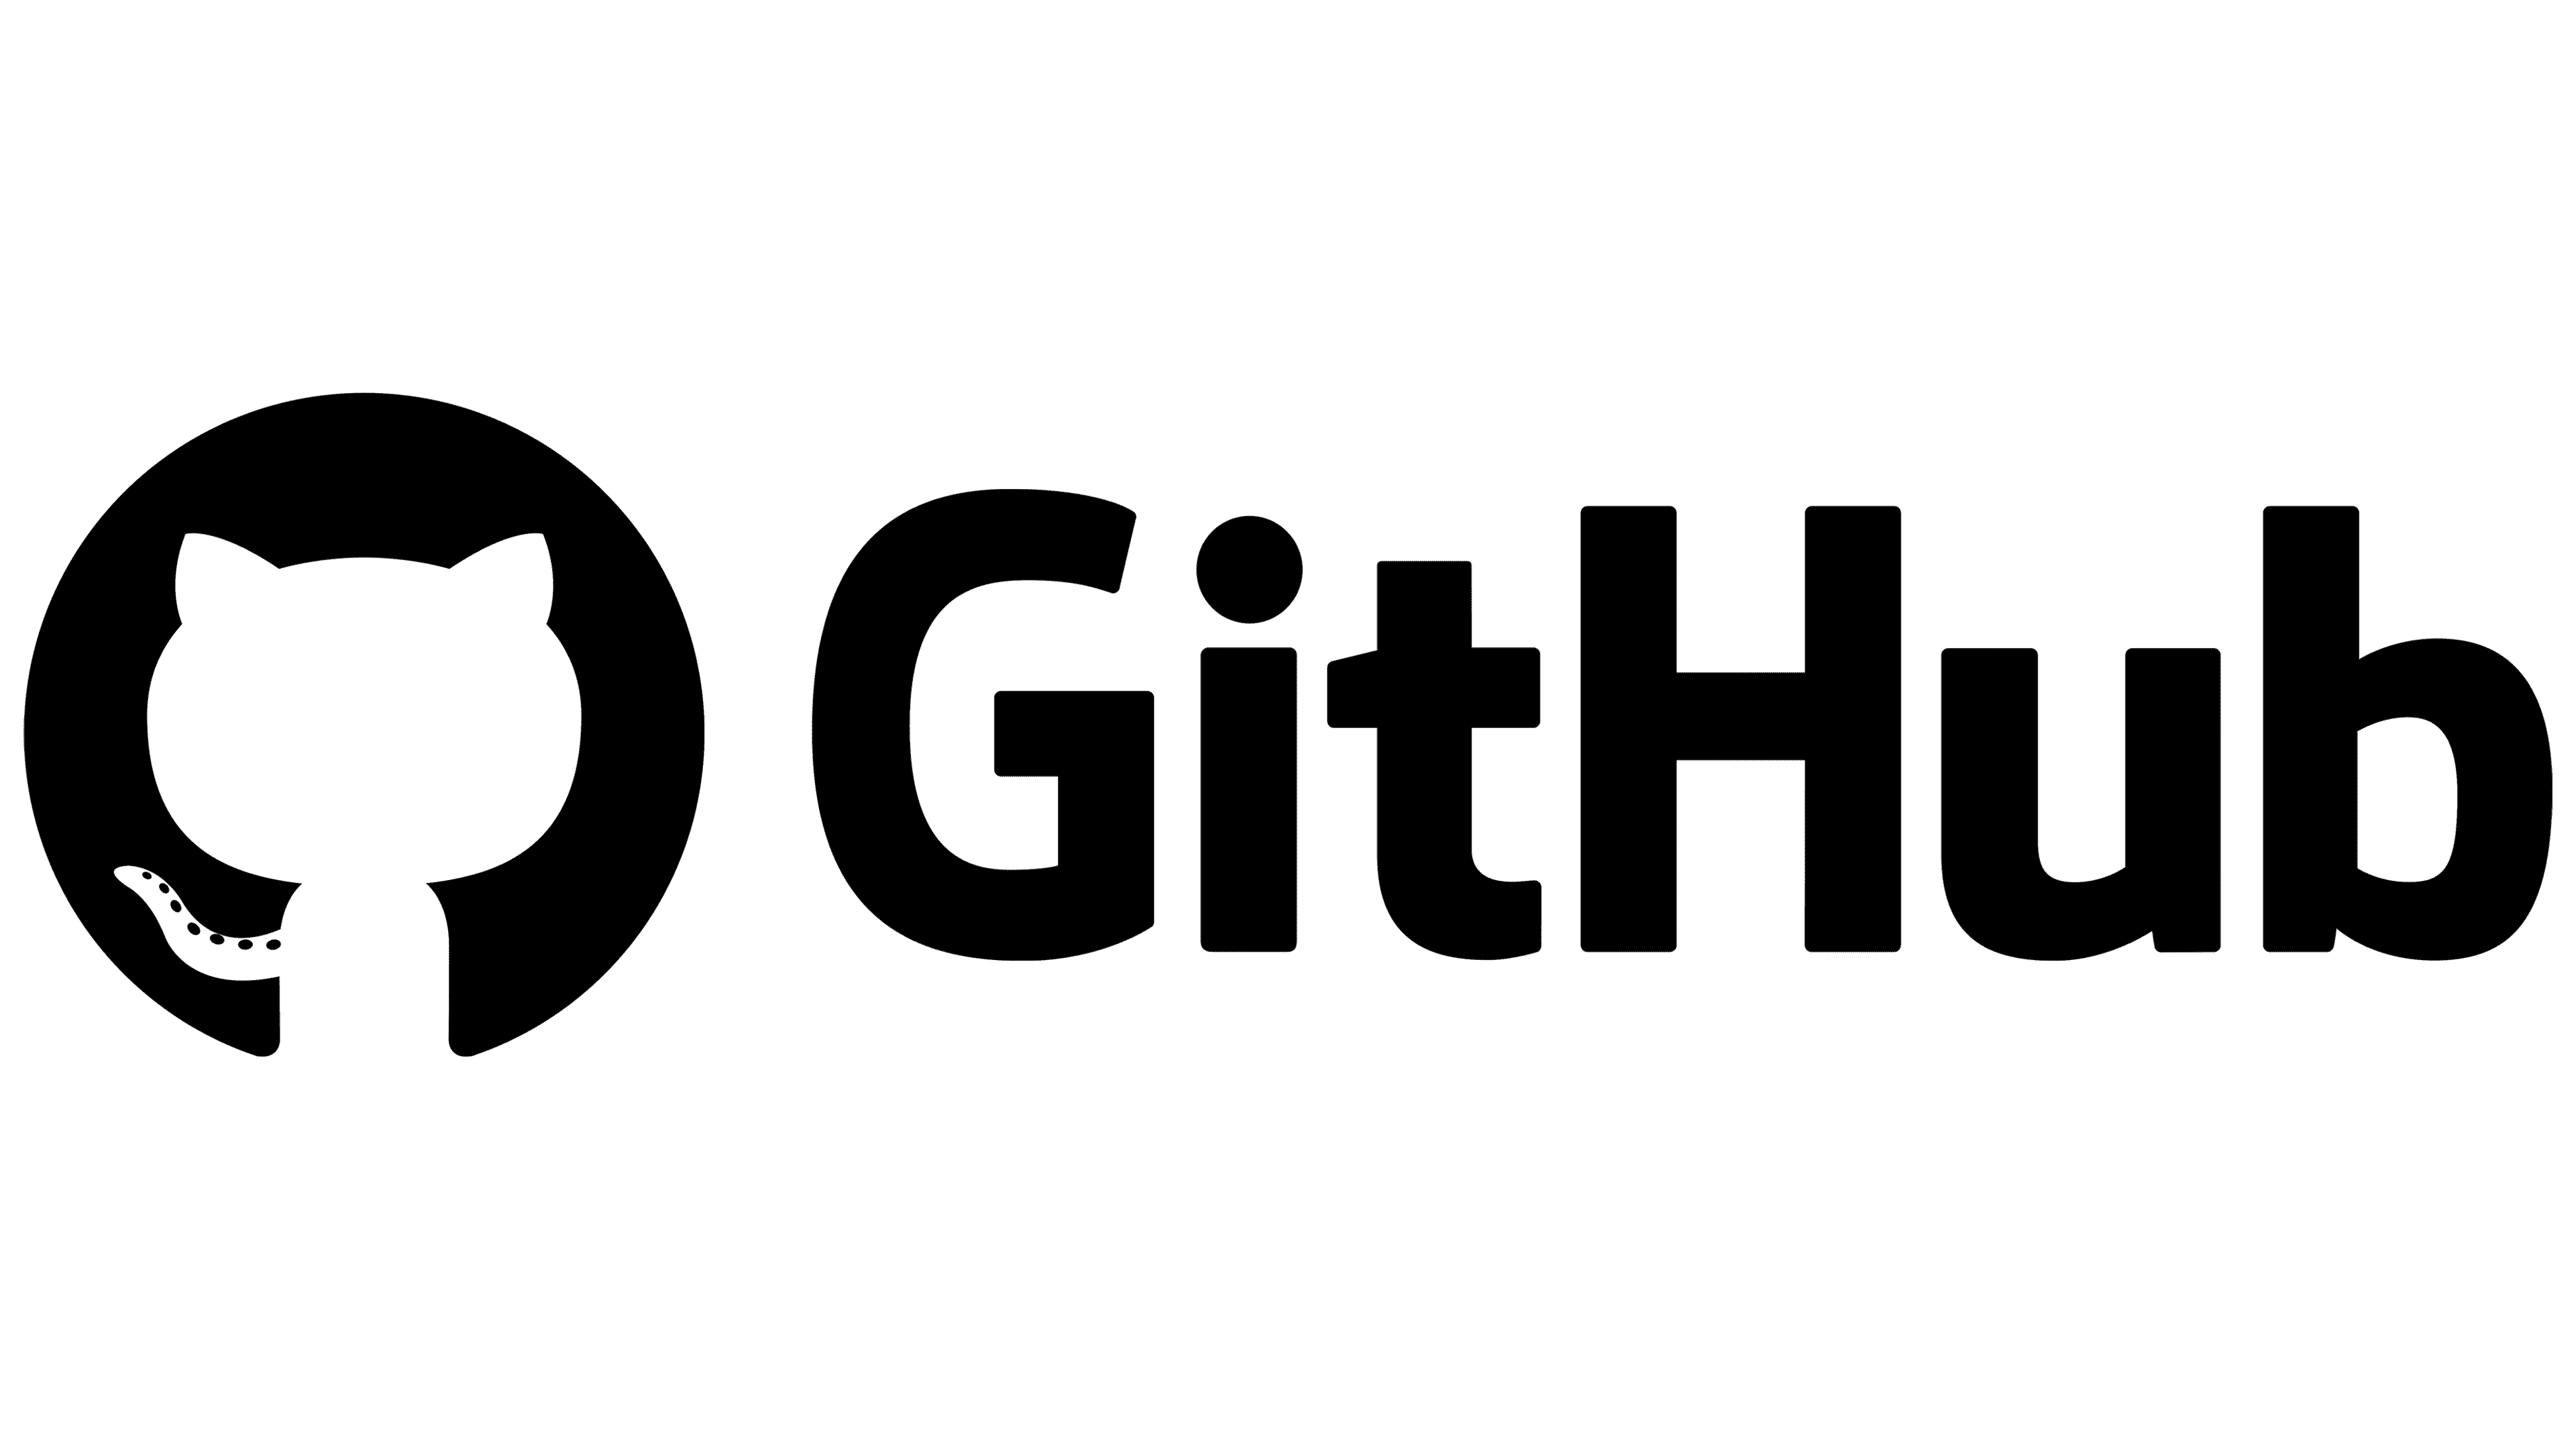 GitHub-Emblem